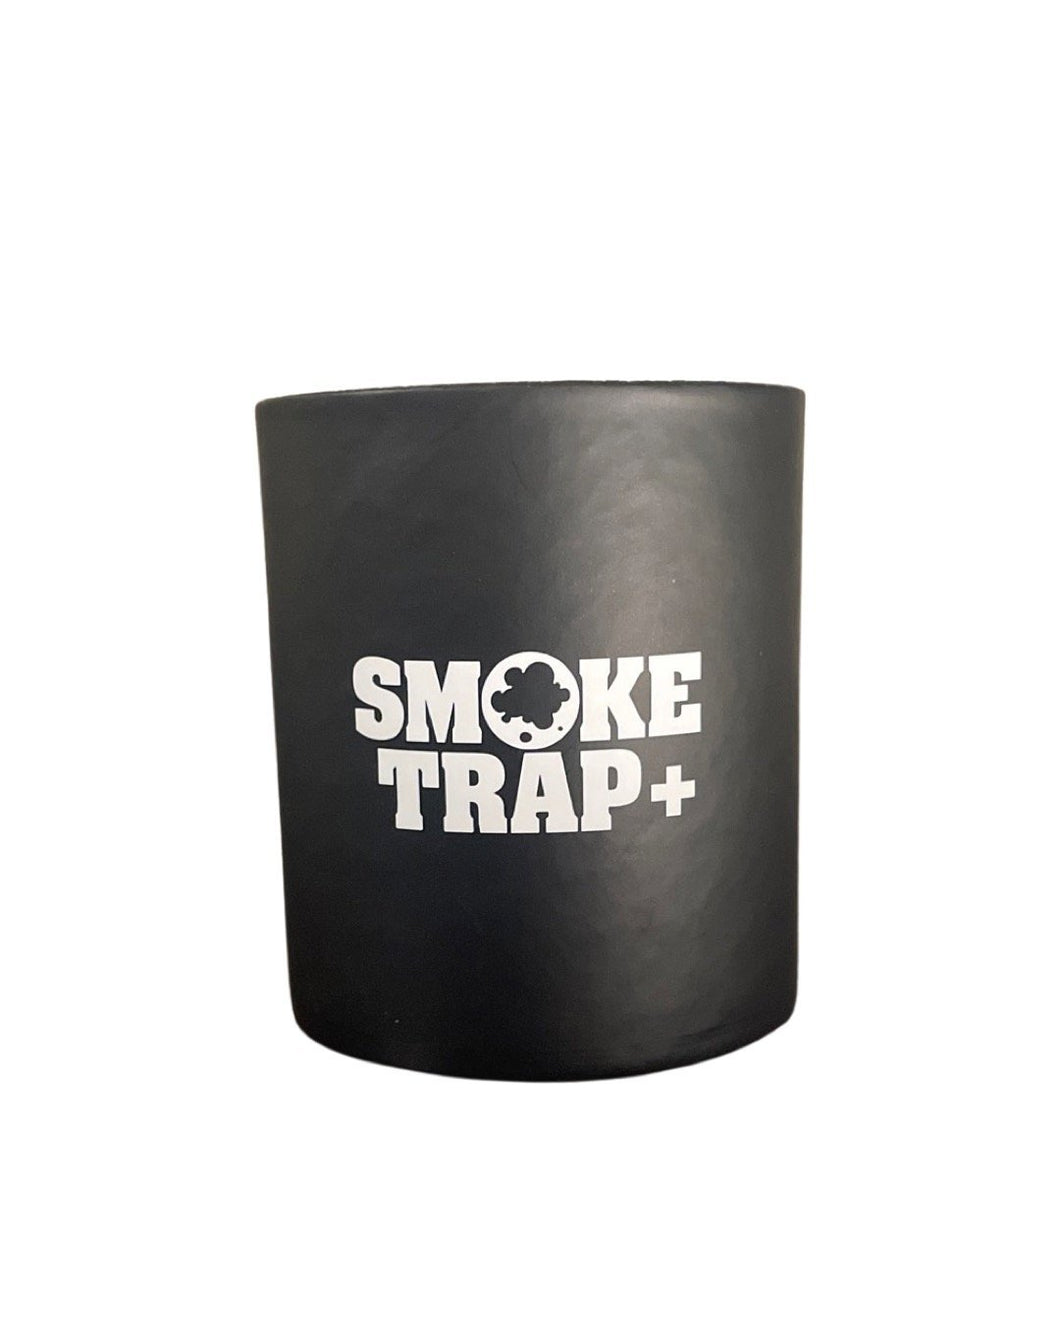 smoke-trap-2-personal-air-filter-for-smoking-weed-filter